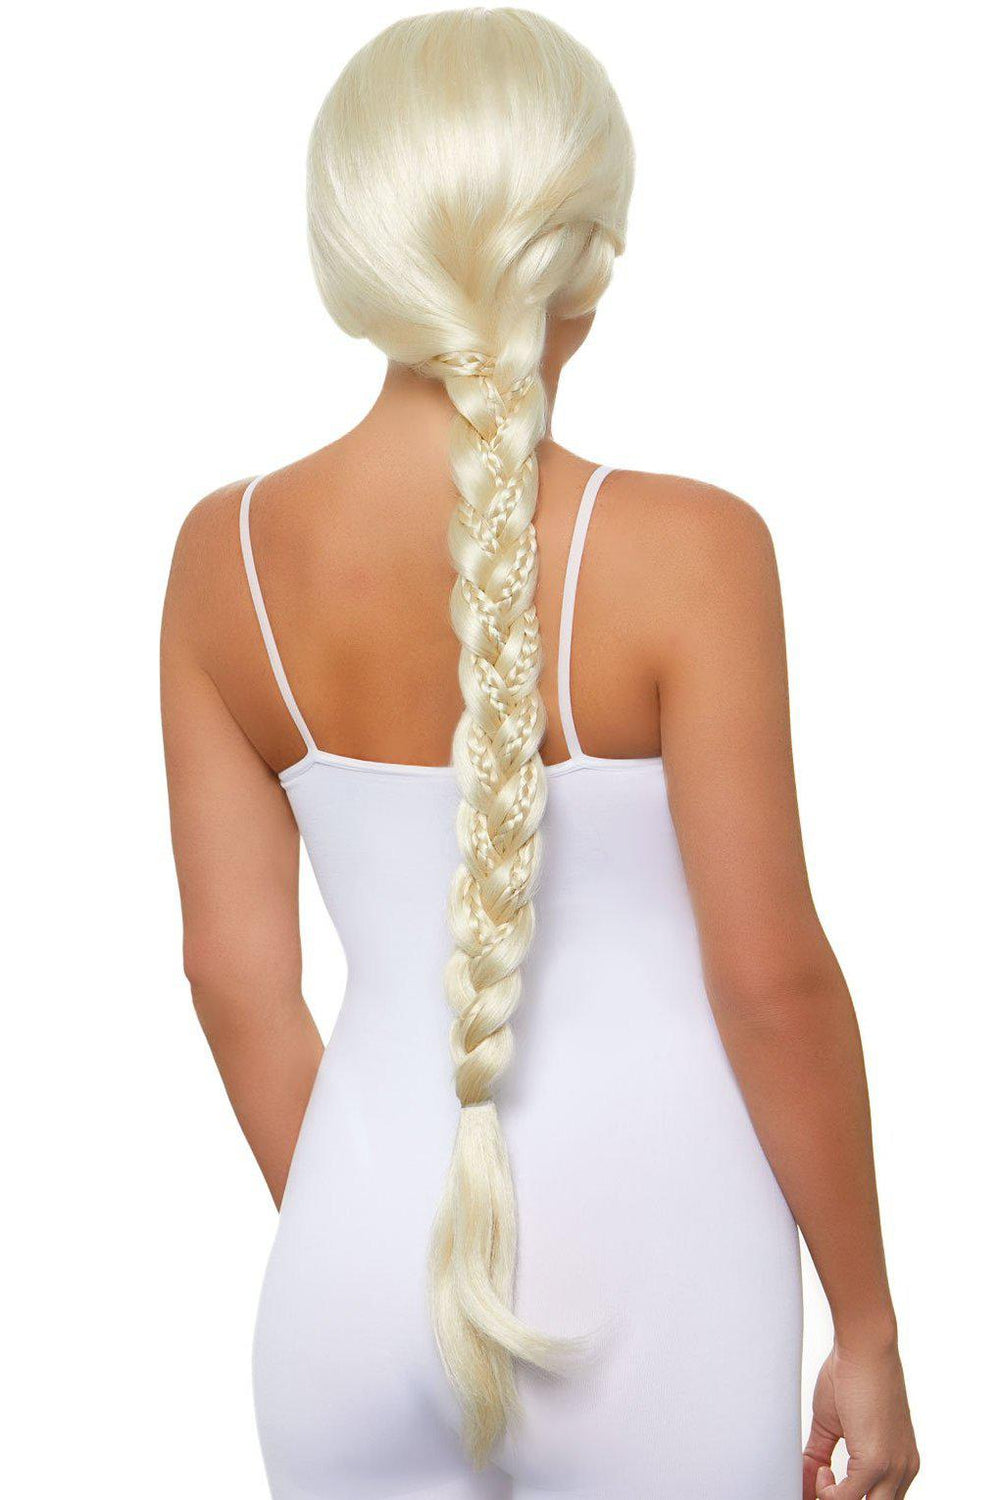 Long Dual Braid Wig-Wigs-Leg Avenue-Blonde-O/S-SEXYSHOES.COM